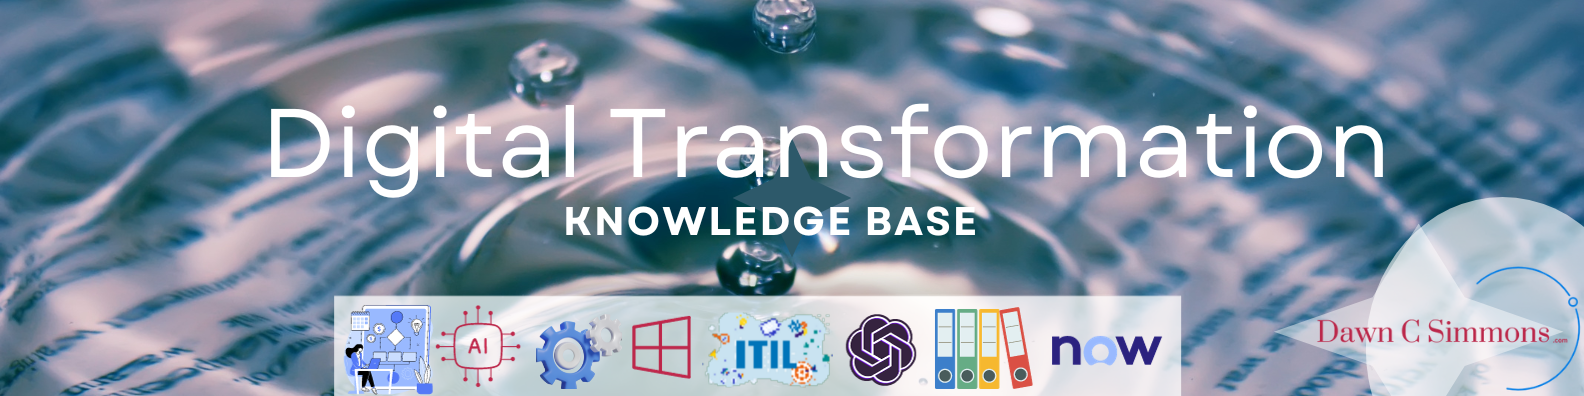 Digital Transformation Knowledge Base